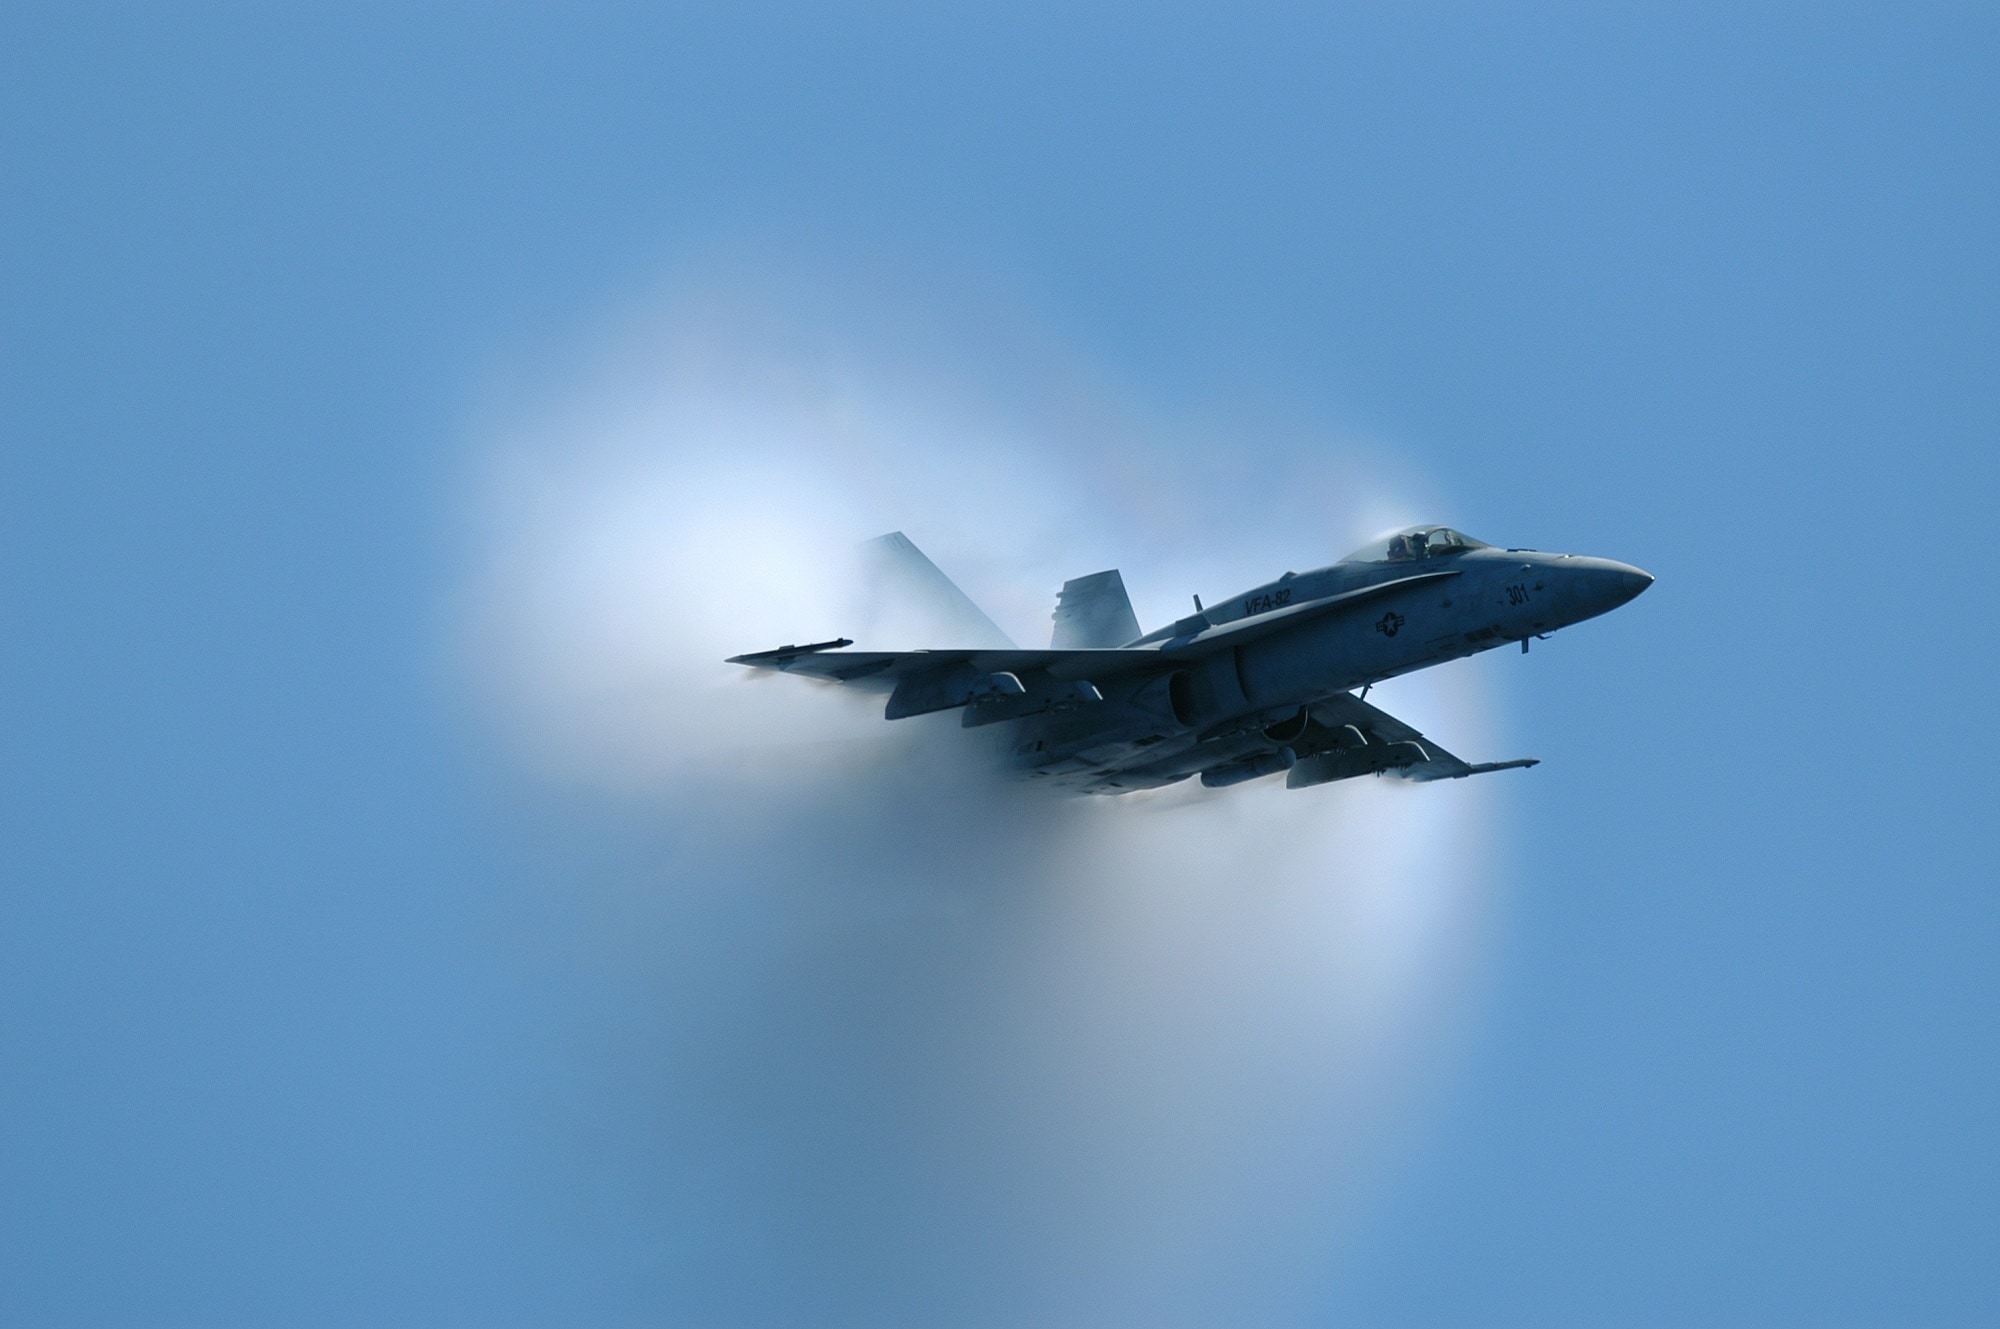 Navy Jet, Supersonic, Sound Barrier, blue, transportation